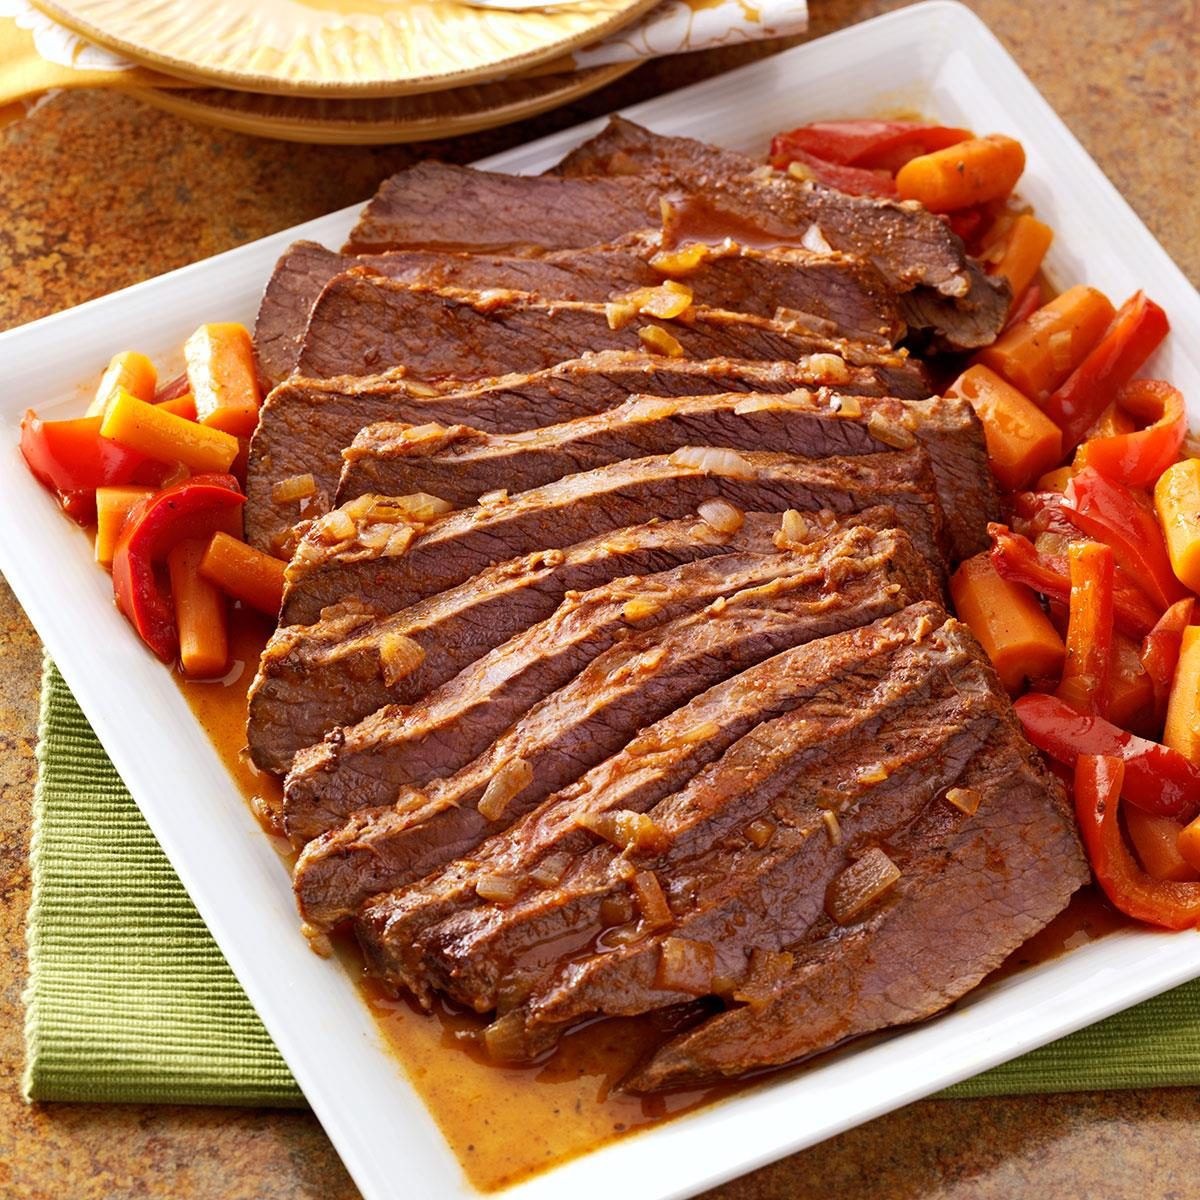 Southwestern Beef Brisket Recipe: How to Make It